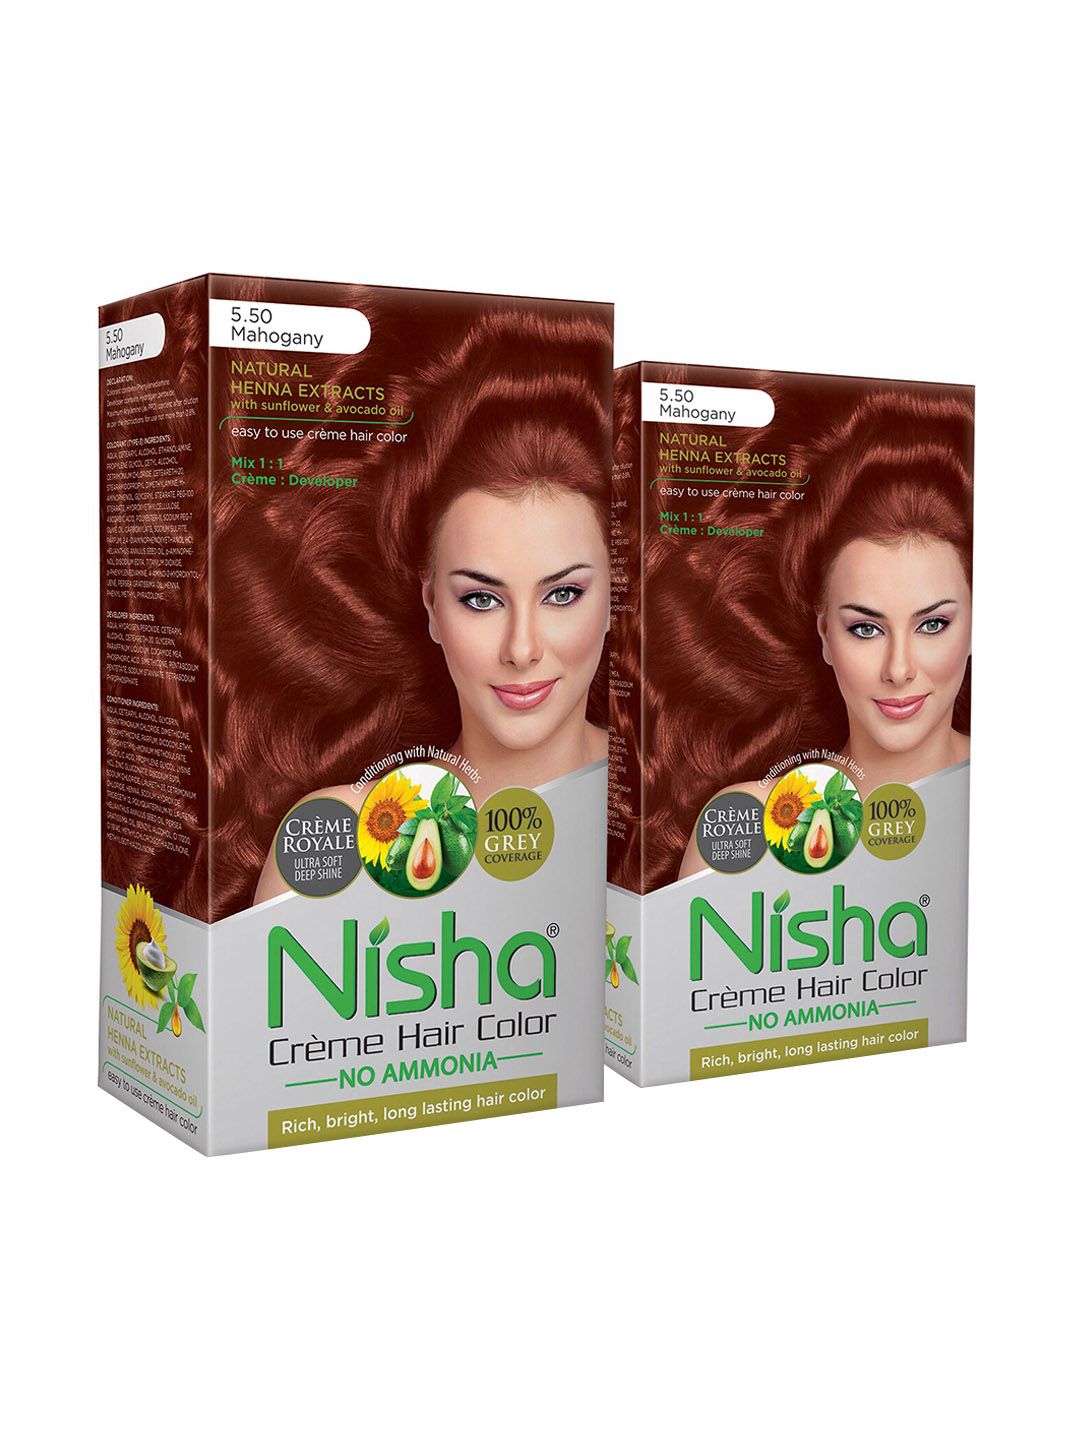 Nisha Pack of 2 Creme Hair Colour 240g - Mahogany Price in India